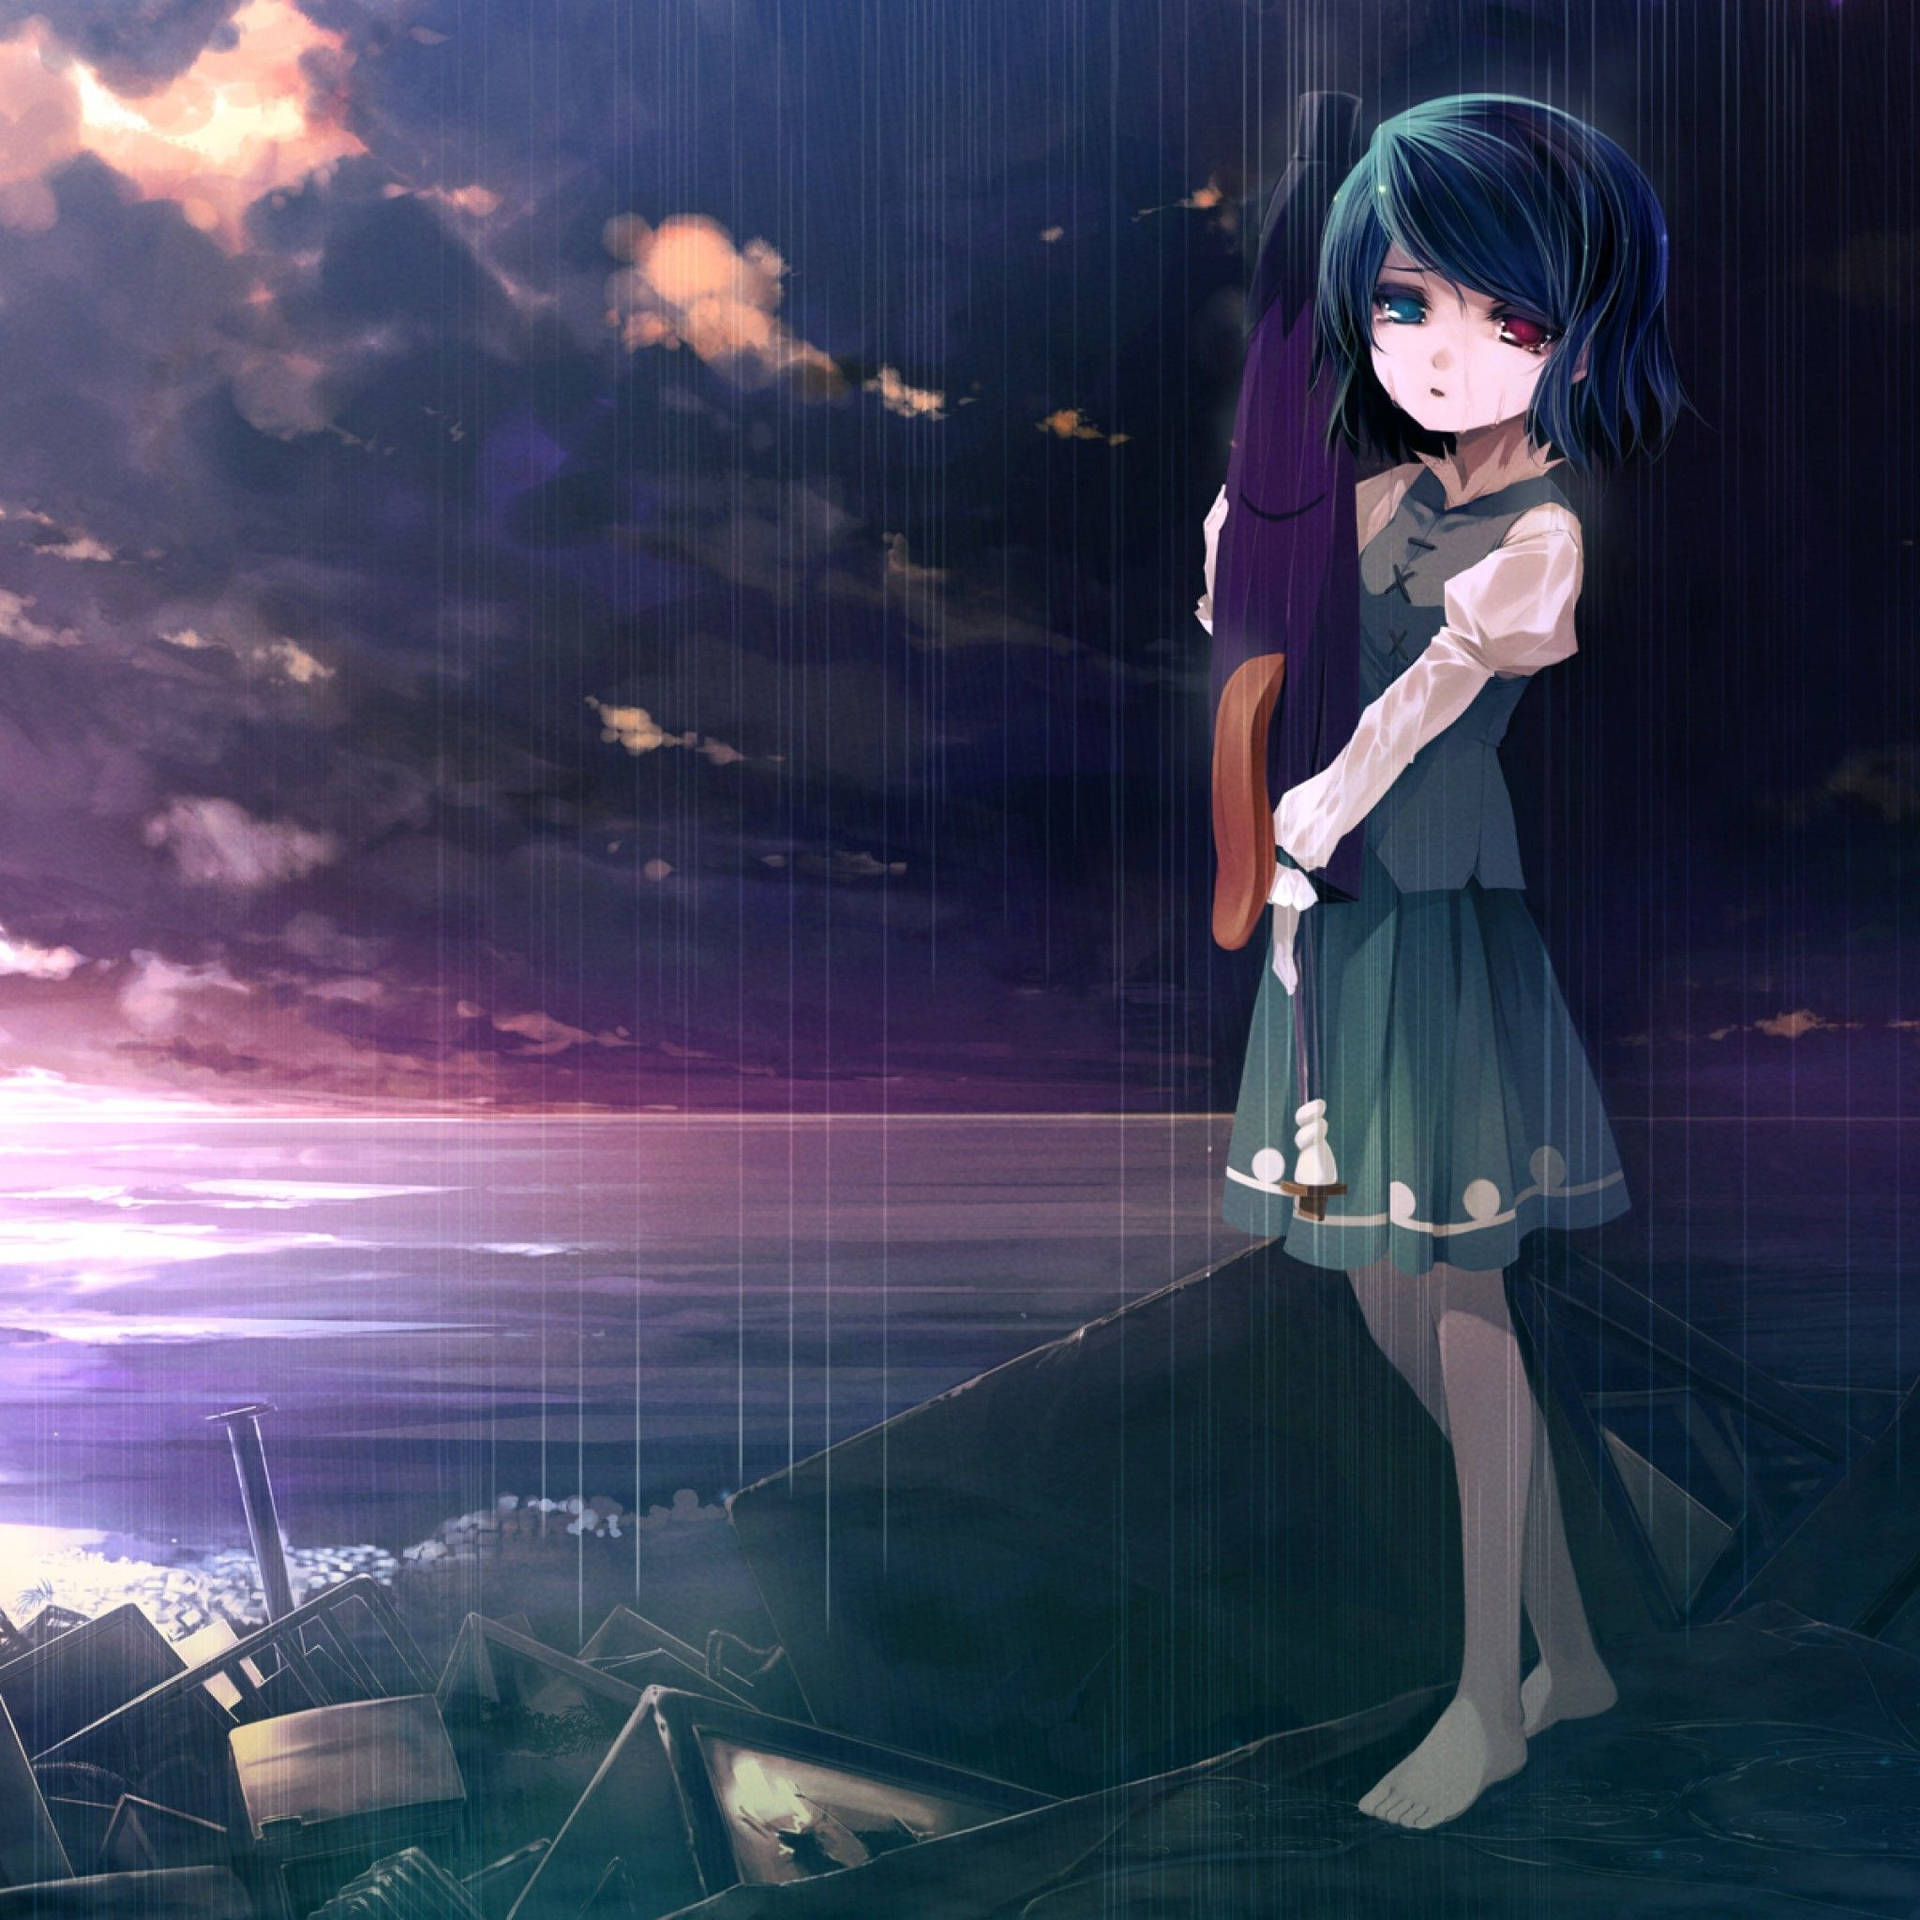 Anime Girl Sad Alone By The Ocean